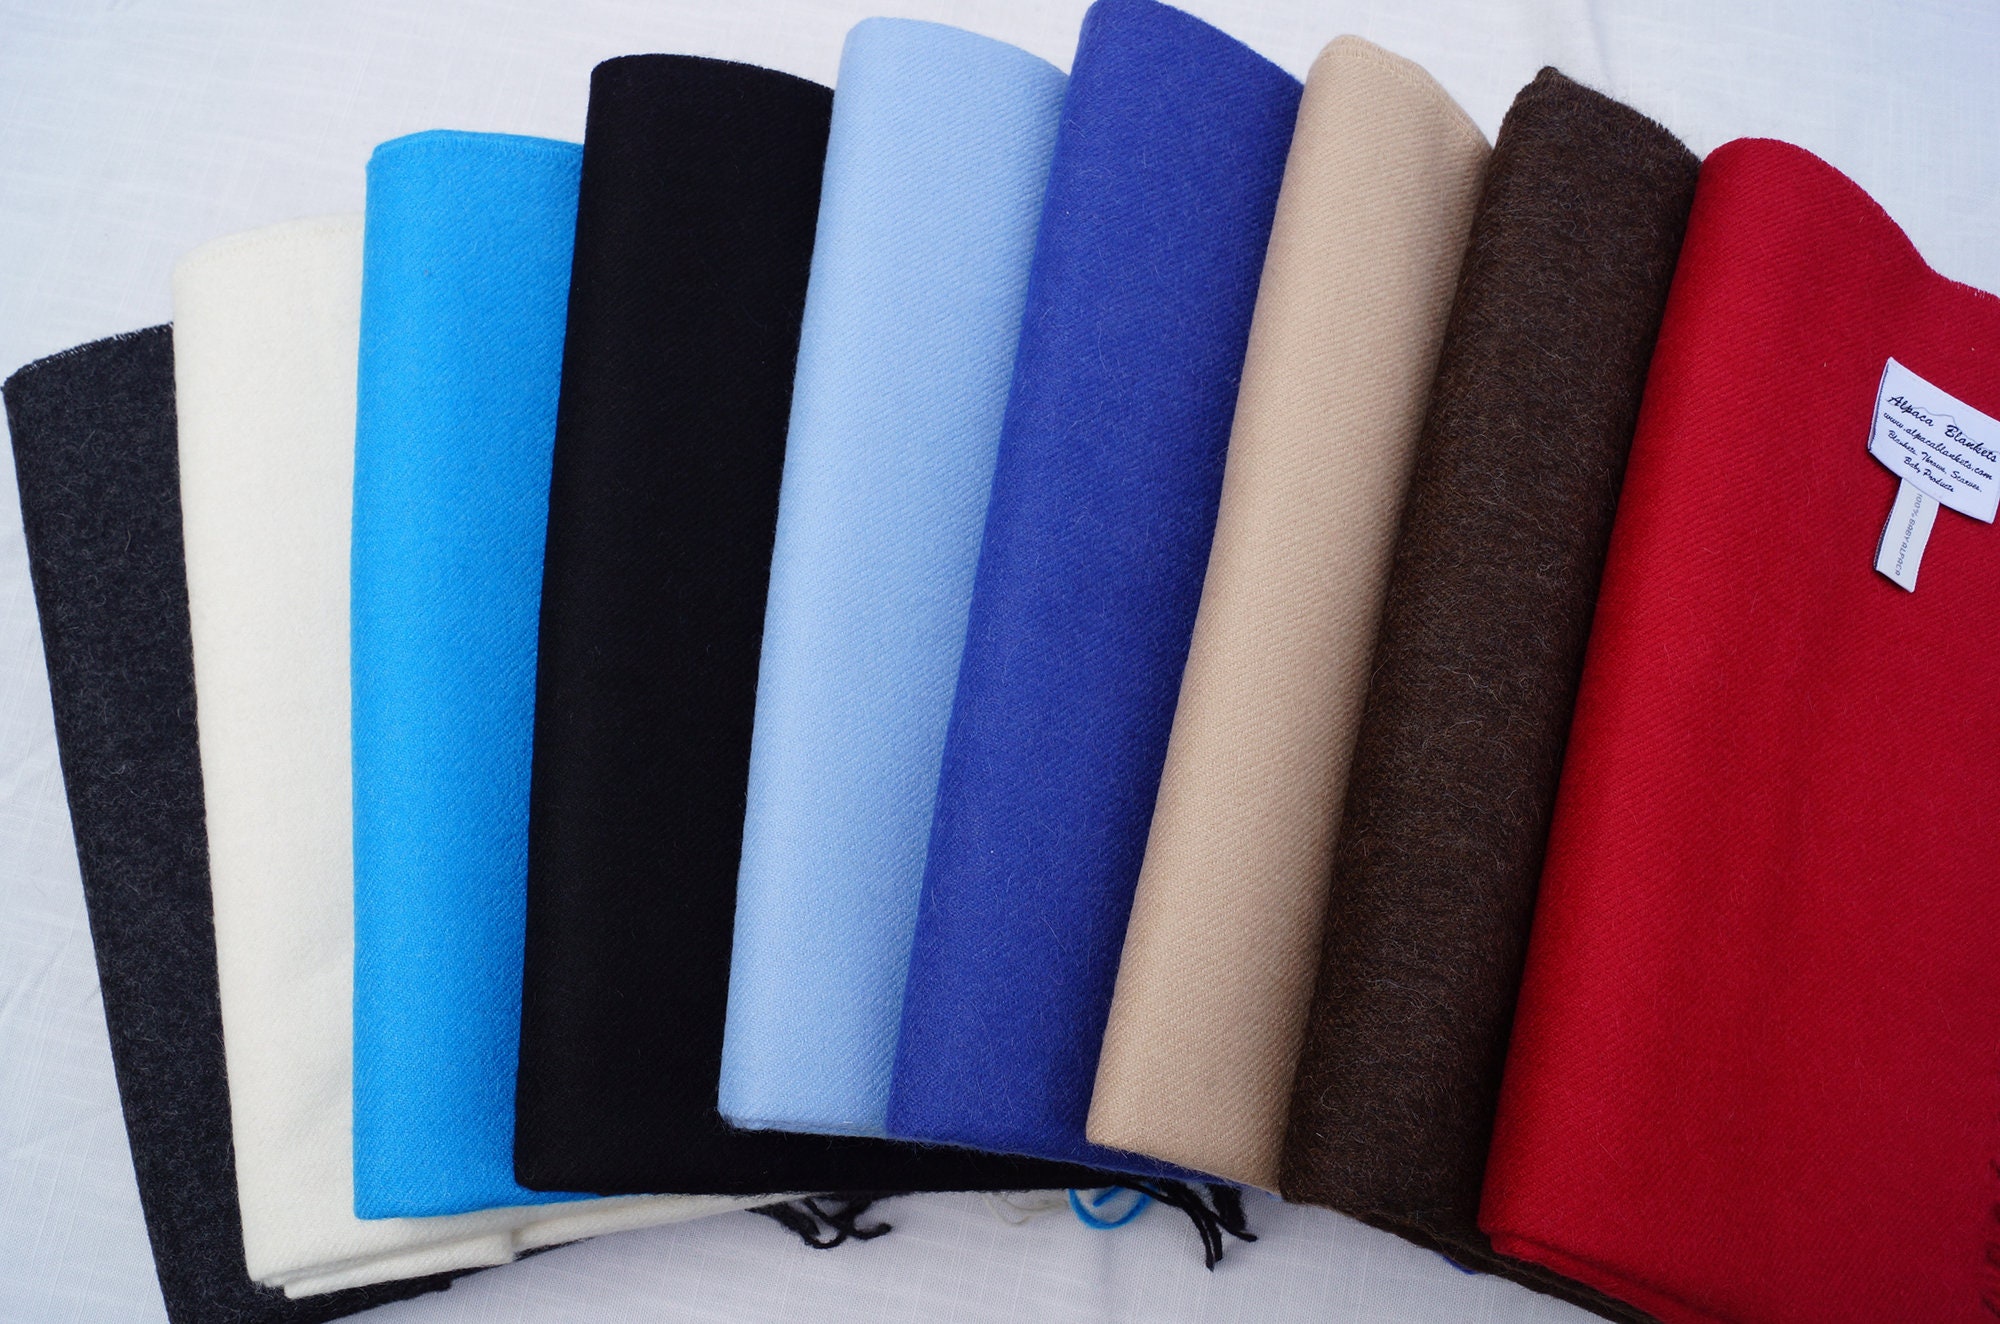 Arm Knit Ribbed Blanket Kit